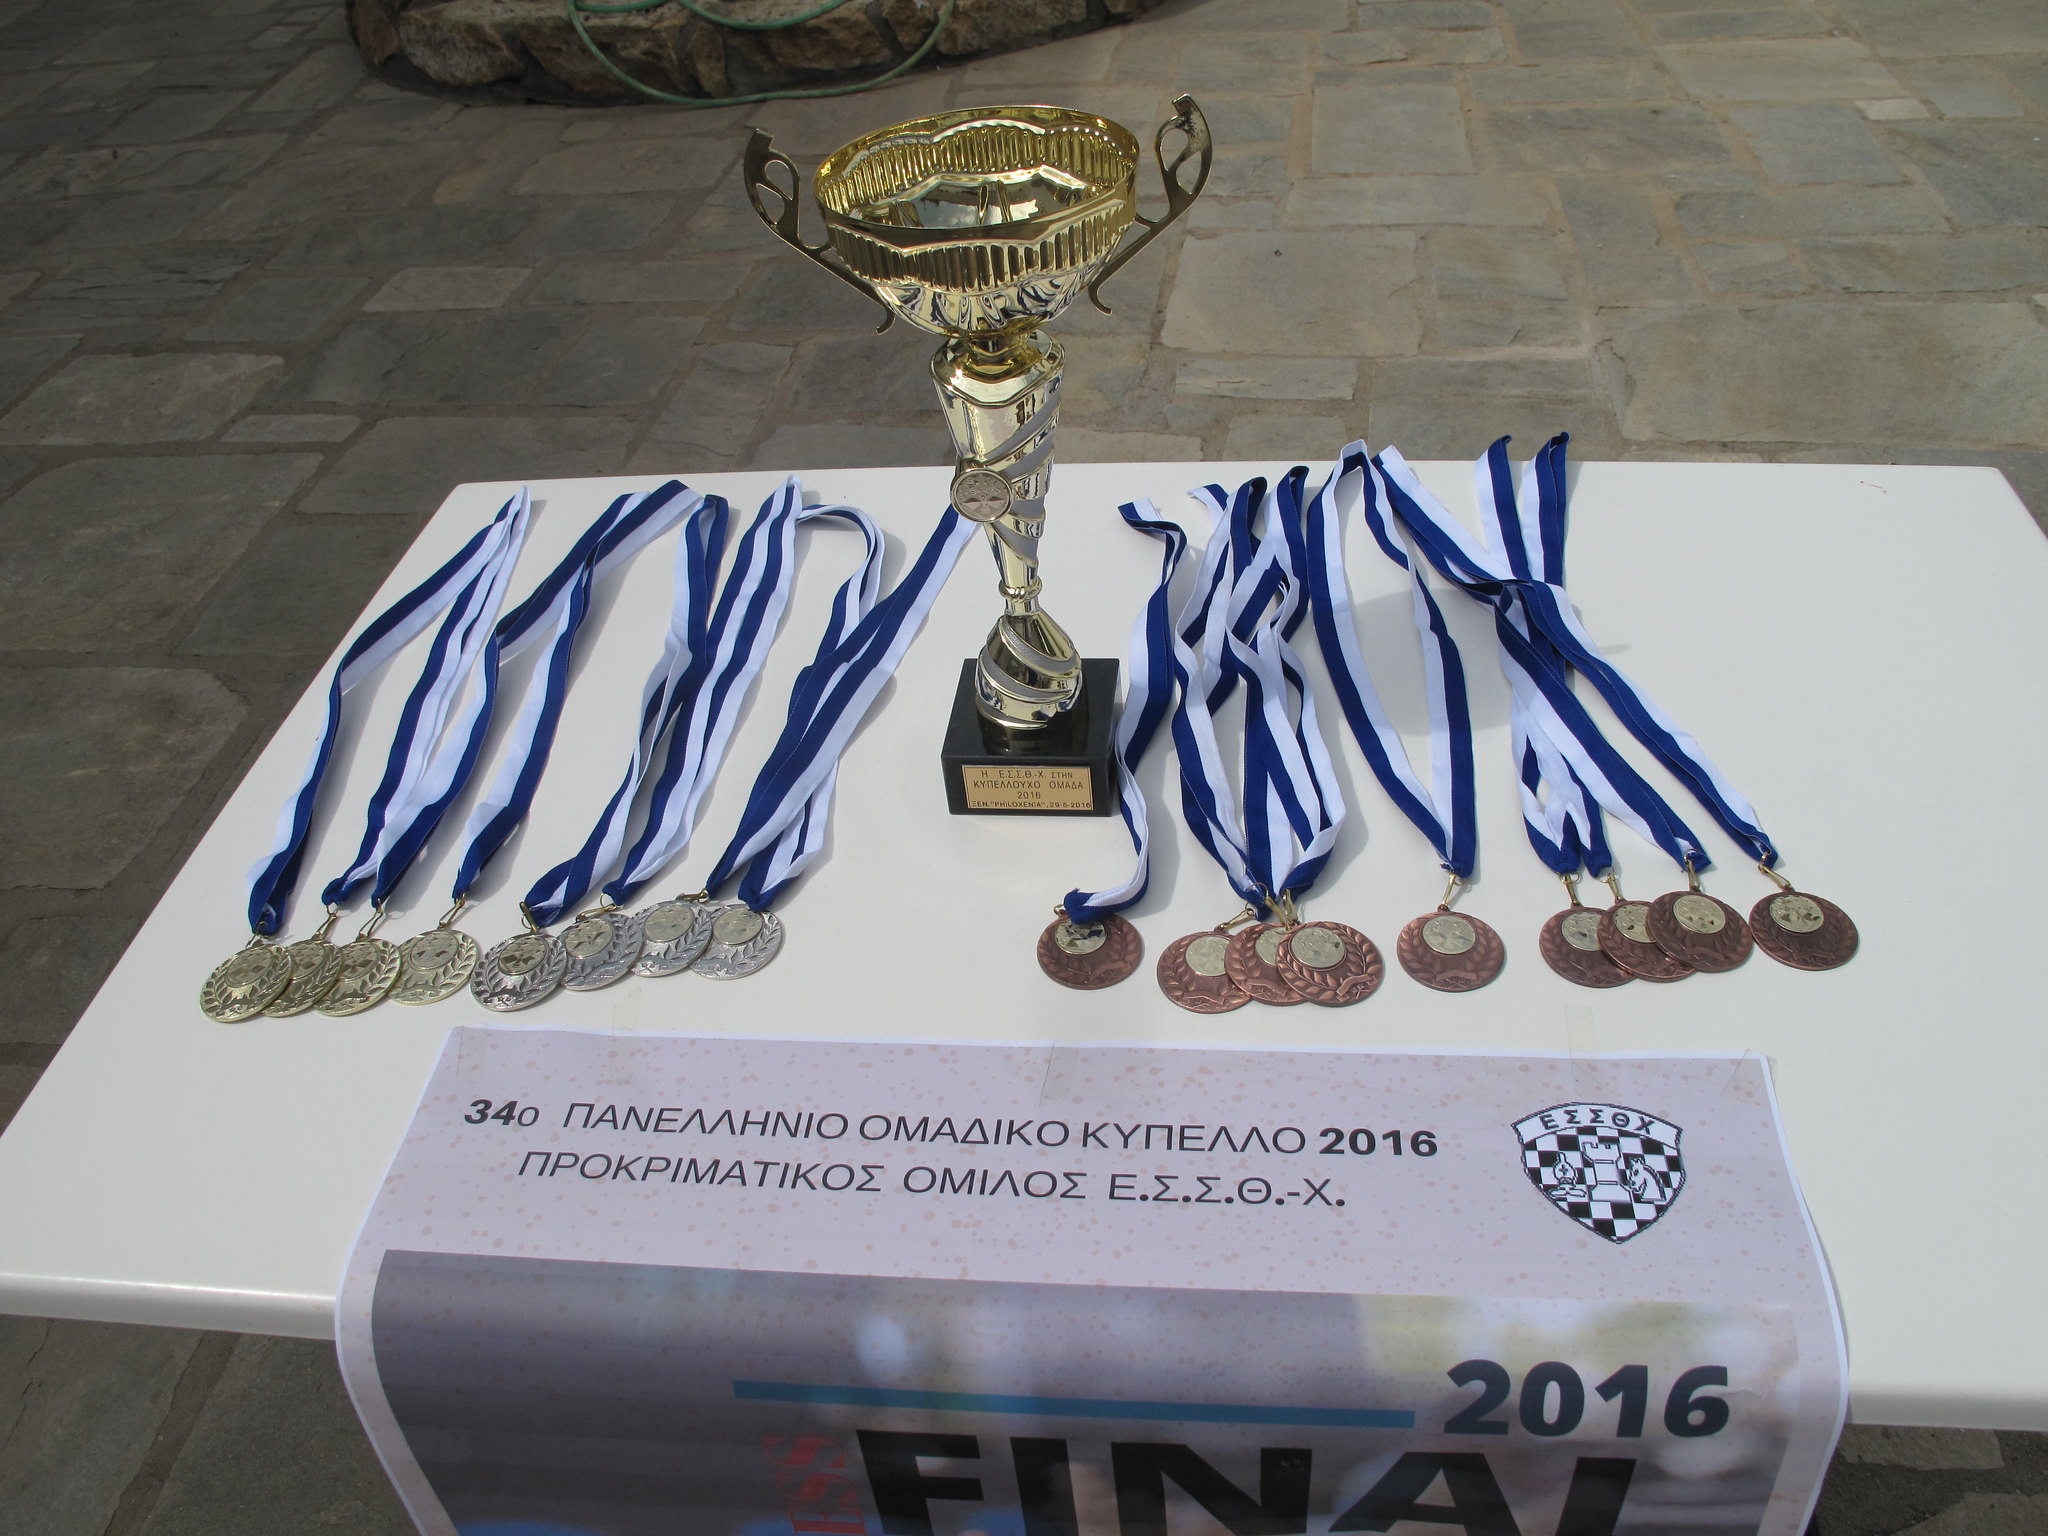 ESSTH-X CUP FINAL FOUR 2016